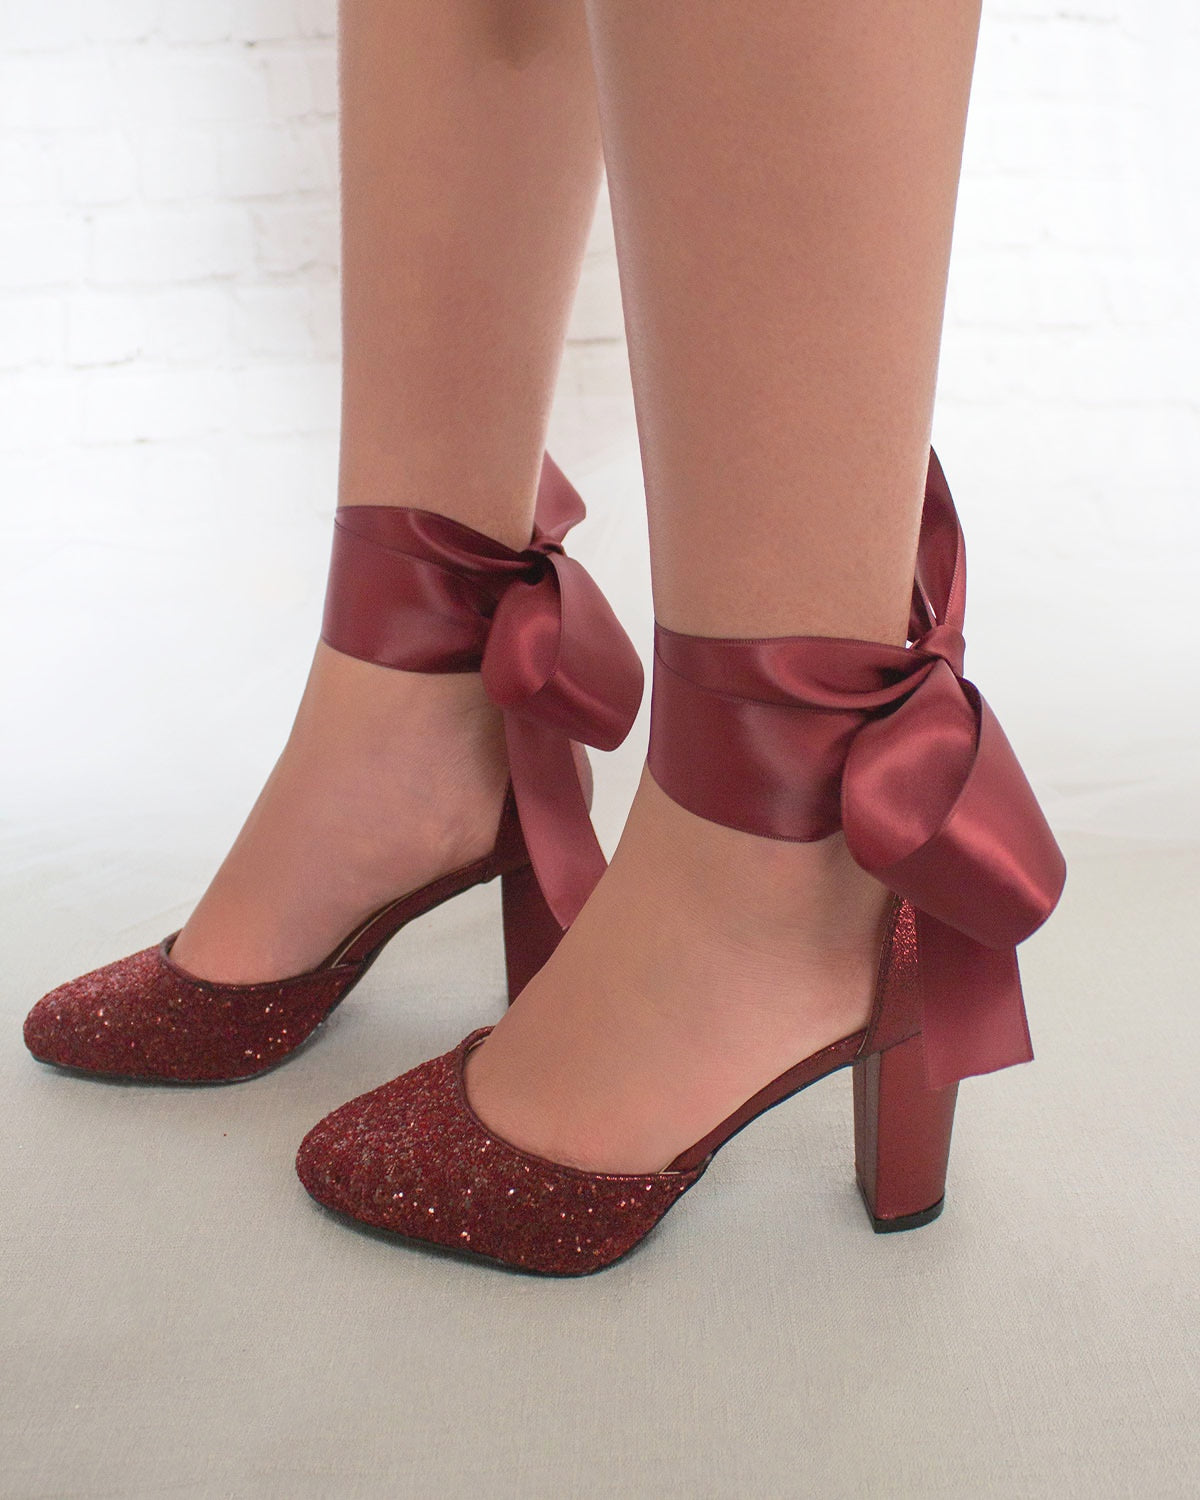 Aldo deep red/burgundy velvet heels. Very chunky and... - Depop